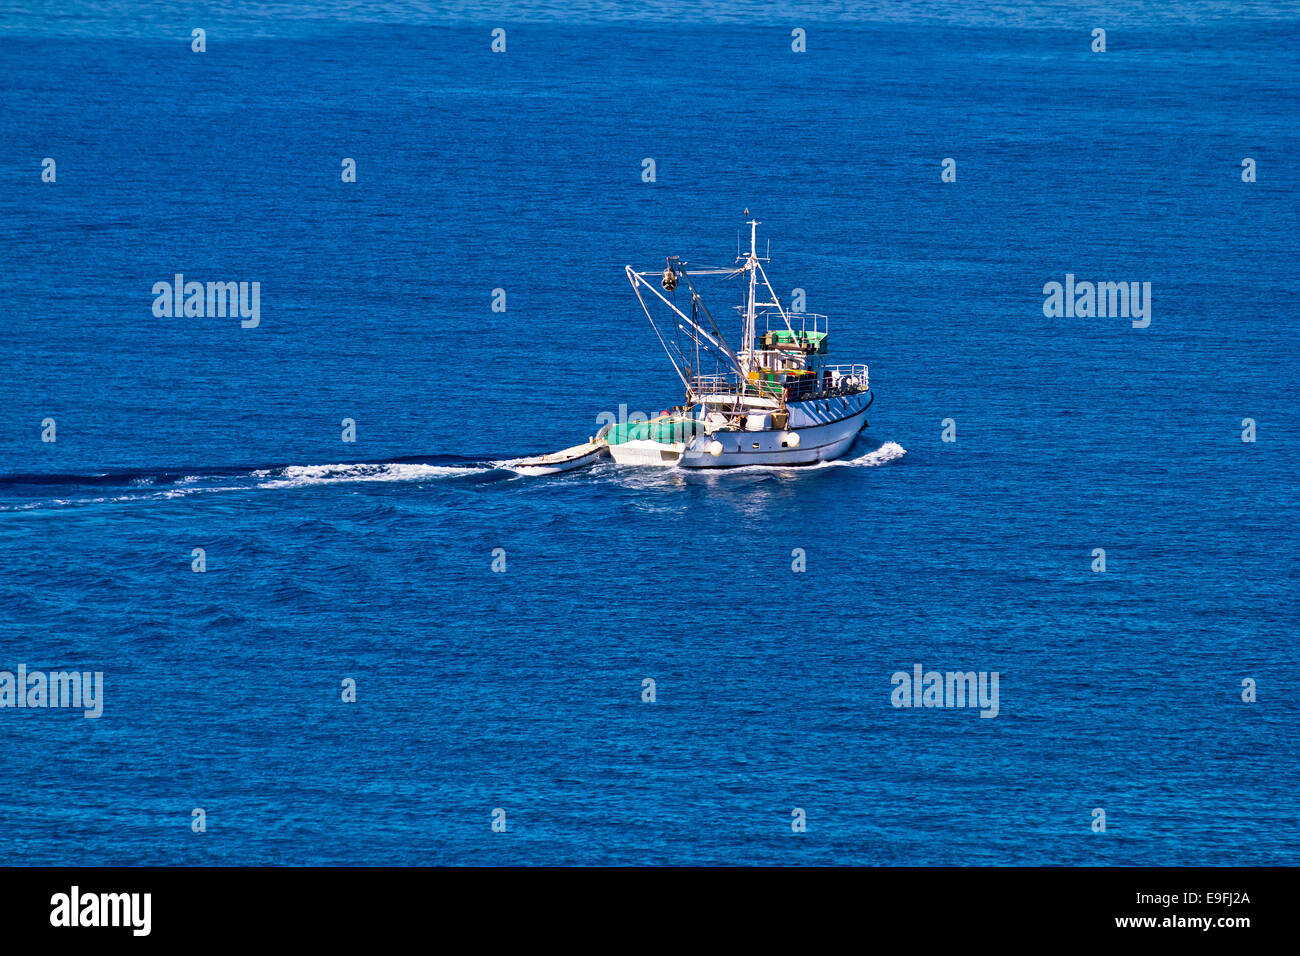 Fishing trawler open water aerial view Stock Photo